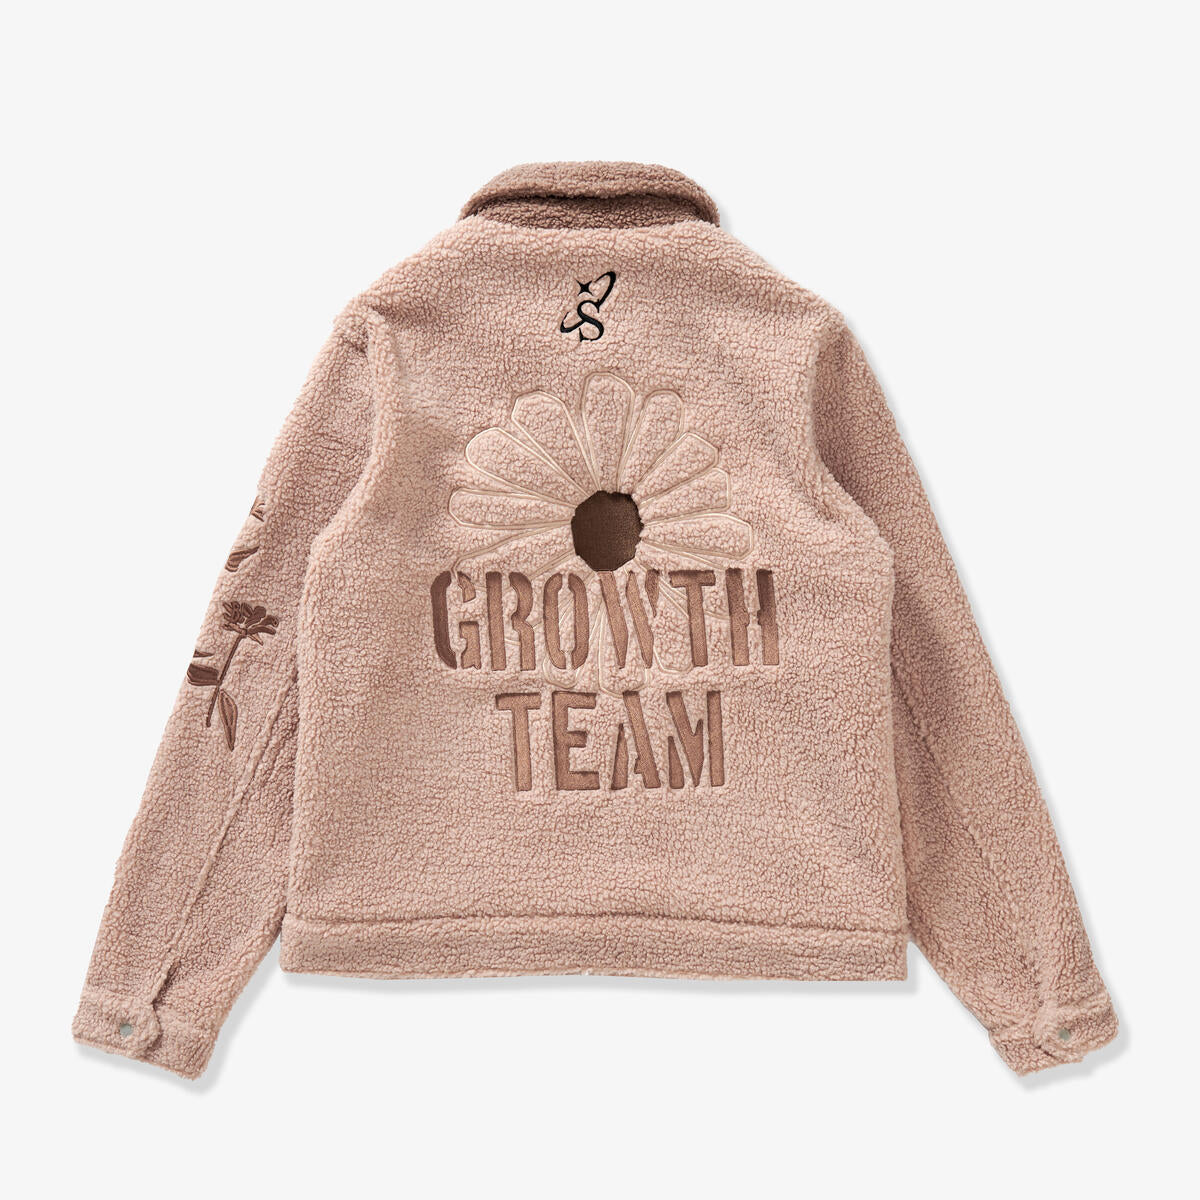 "Growth" Sherpa Jacket - Sand